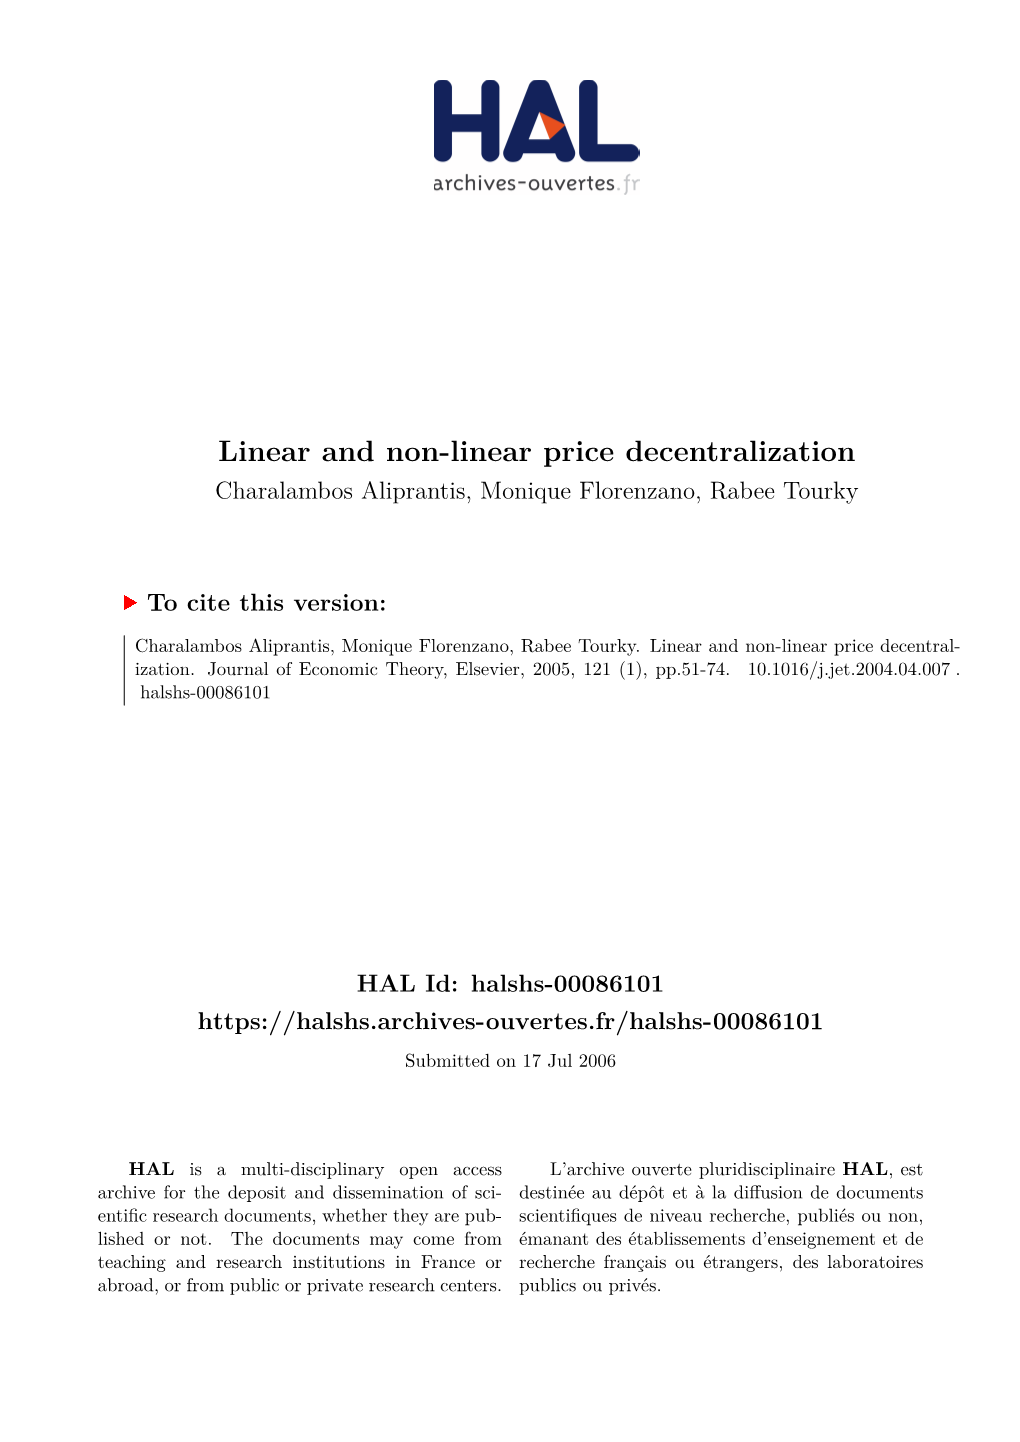 Linear and Non-Linear Price Decentralization Charalambos Aliprantis, Monique Florenzano, Rabee Tourky